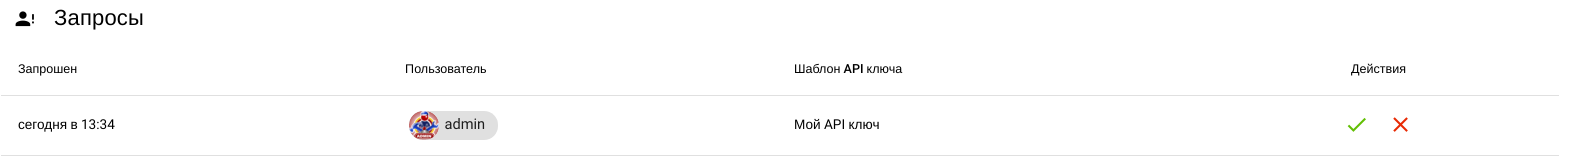 API request confirmation